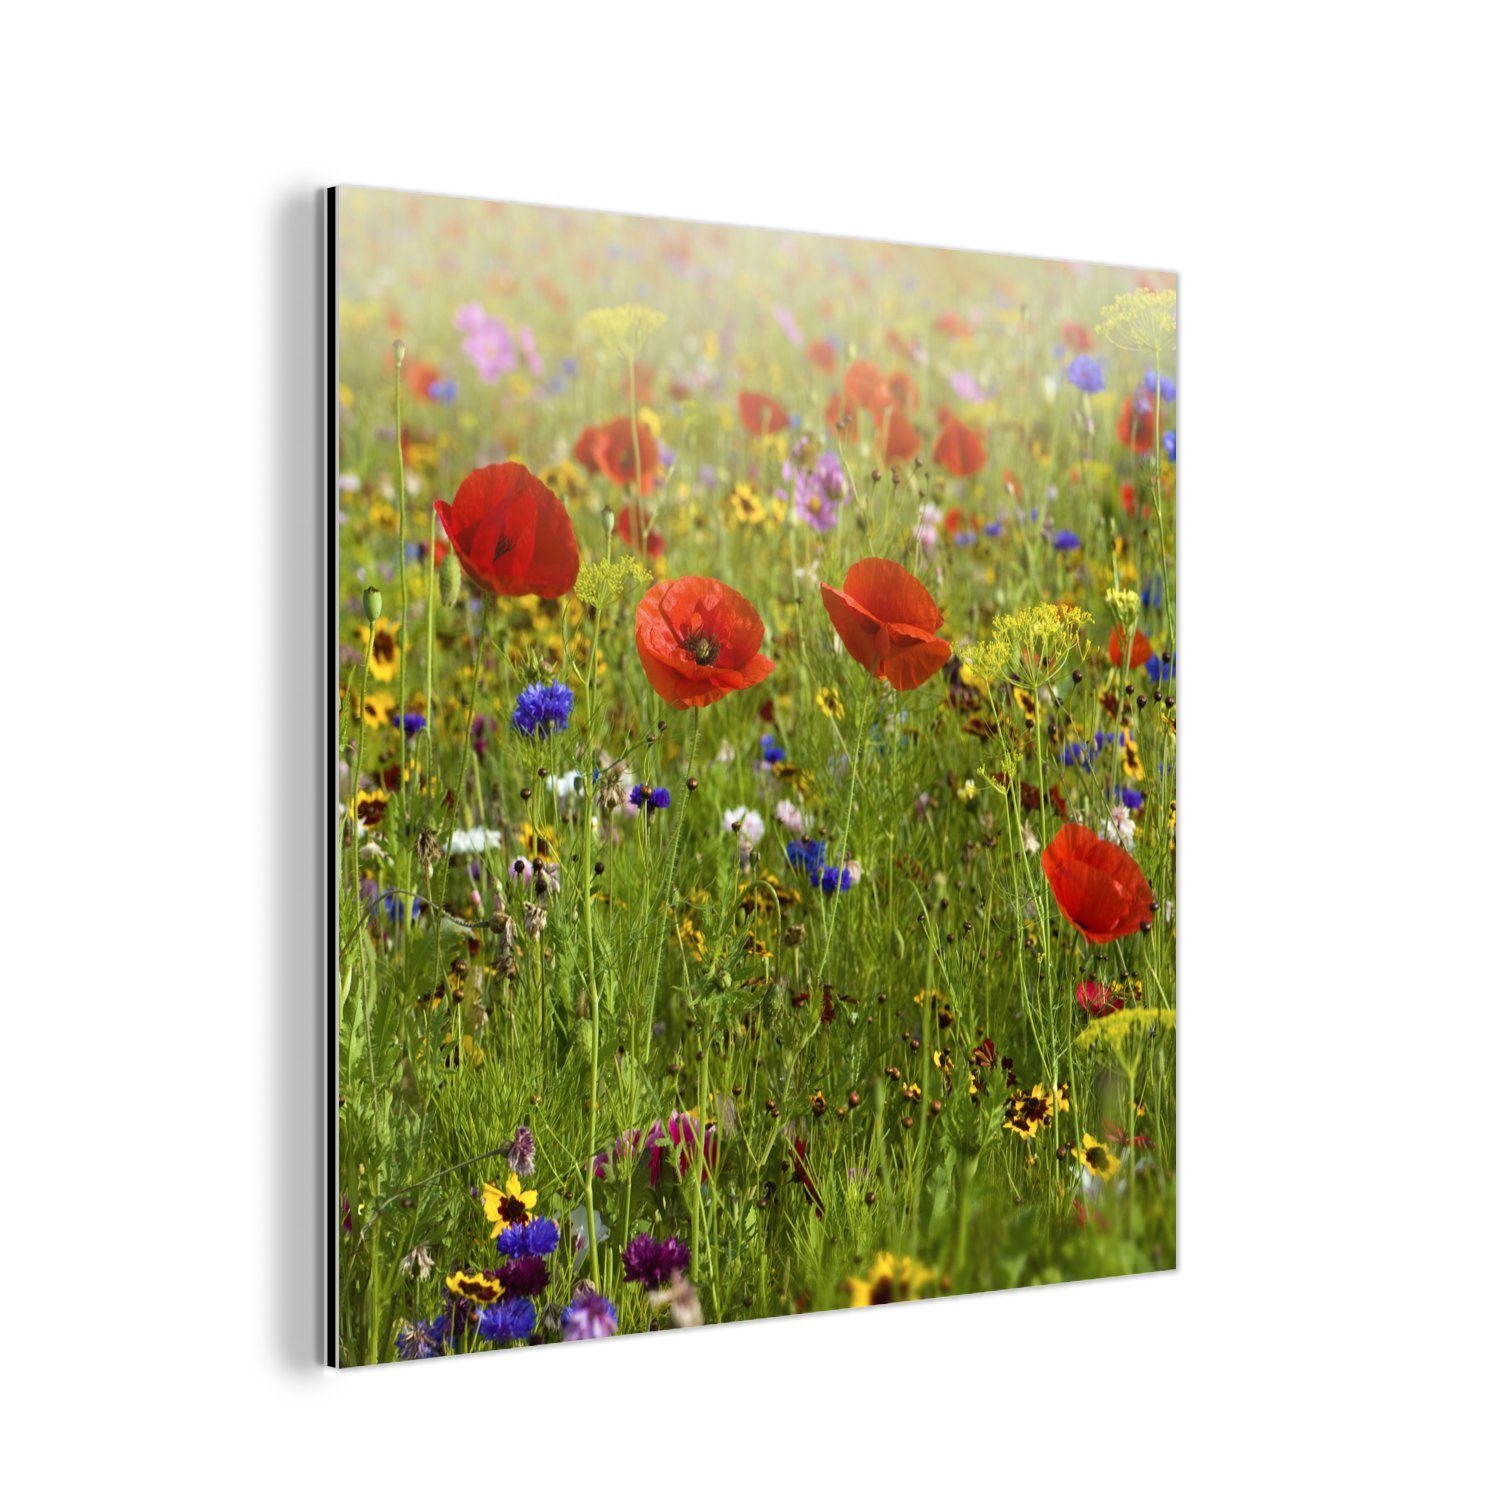 MuchoWow Metallbild Frühling - Blumen - Rot - Mohn - Gras - Grün, (1 St), Alu-Dibond-Druck, Gemälde aus Metall, Aluminium deko